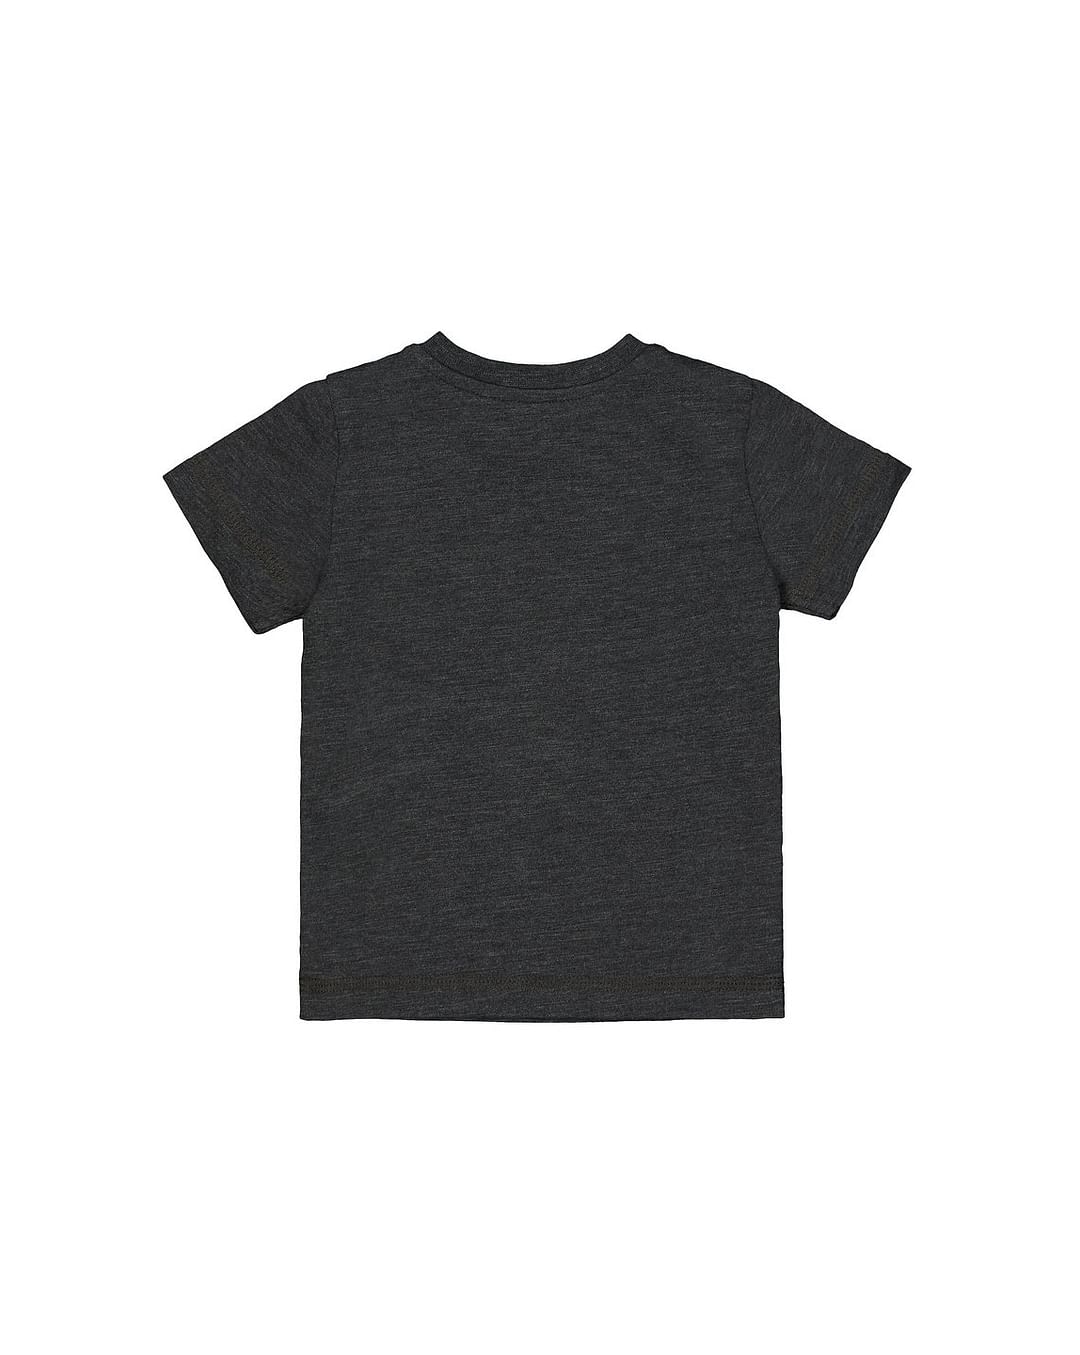 Mothercare | Charcoal Printed T-Shirt 1